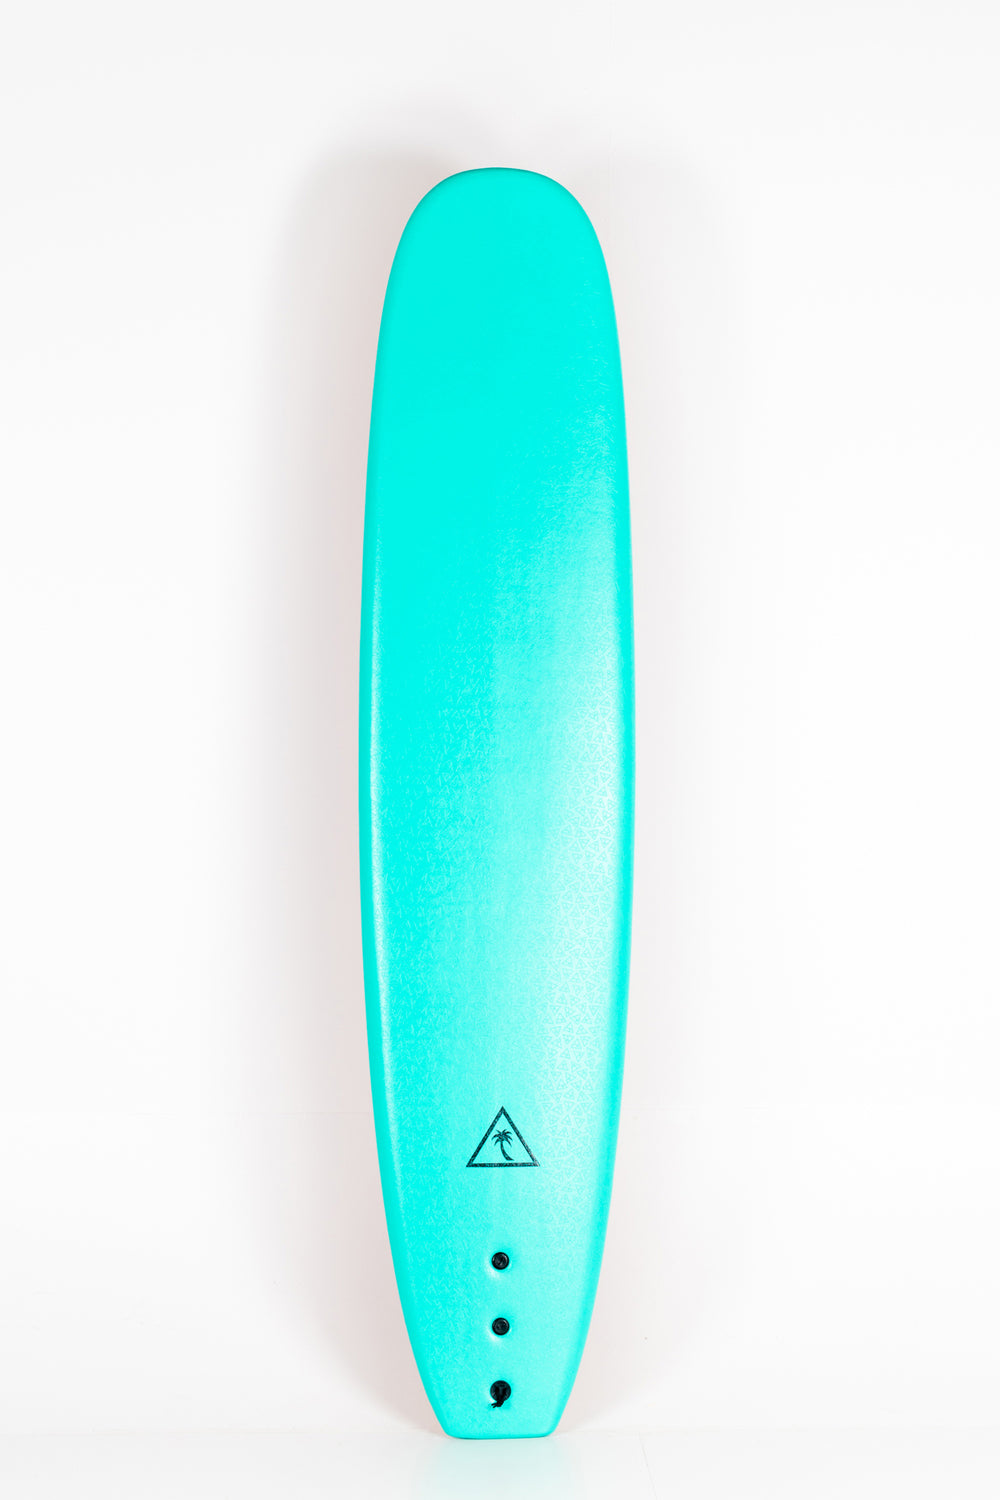 Pukas Surf Shop - Catch Surf - NOSERIDER SINGLE FIN Turquoise Orange - 8'6